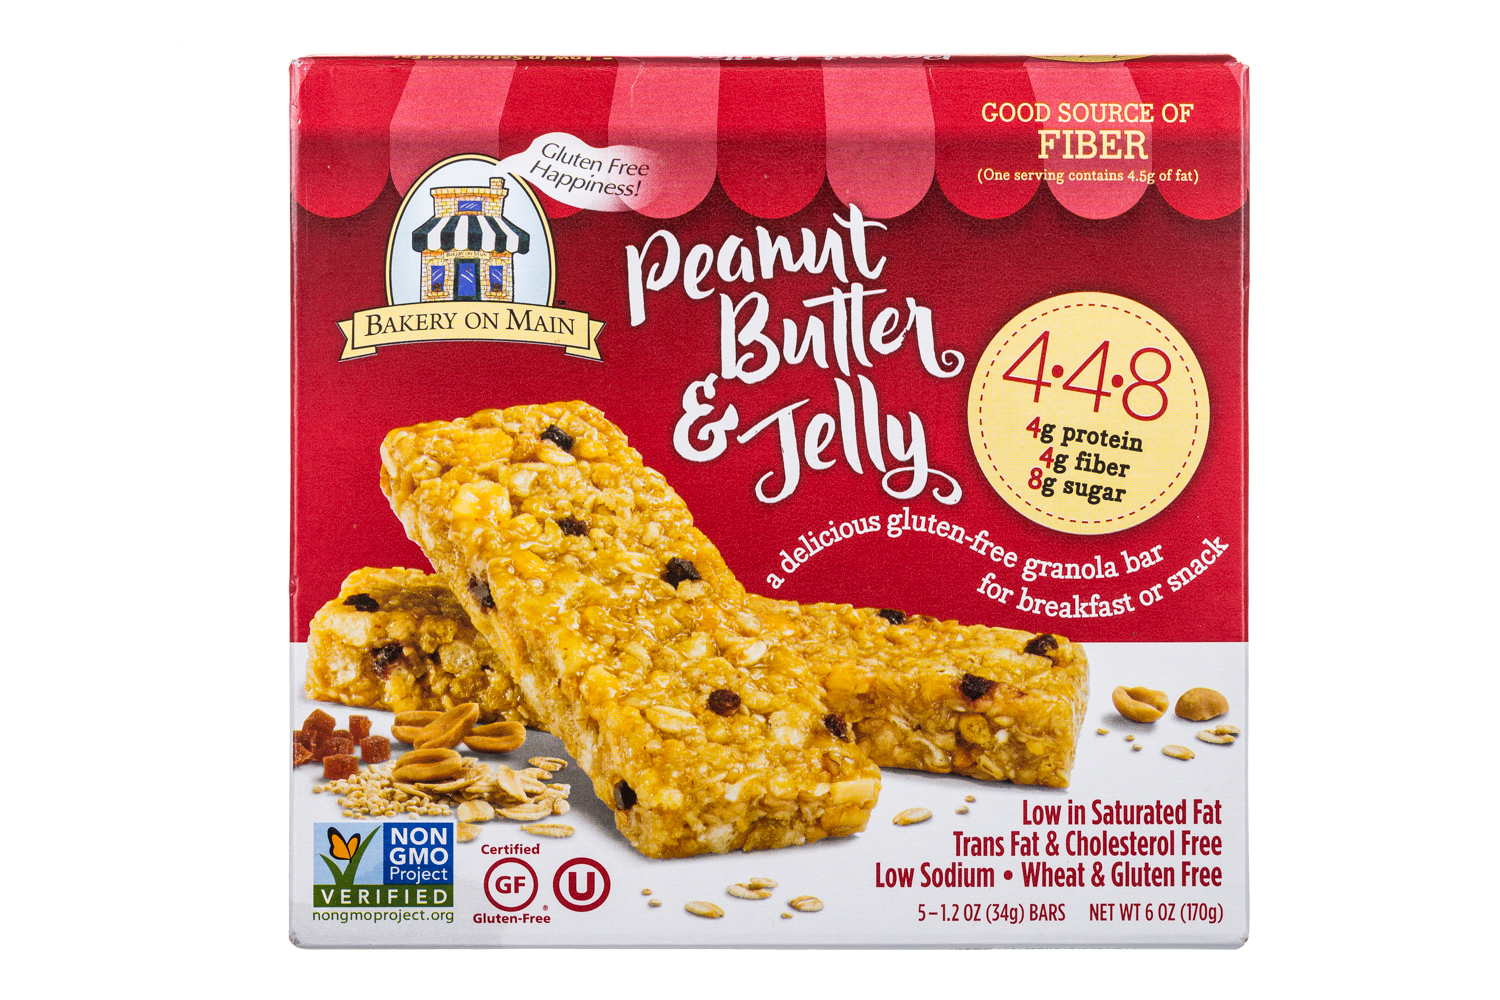 Peanut Butter & Jelly Gluten-free Granola Bar